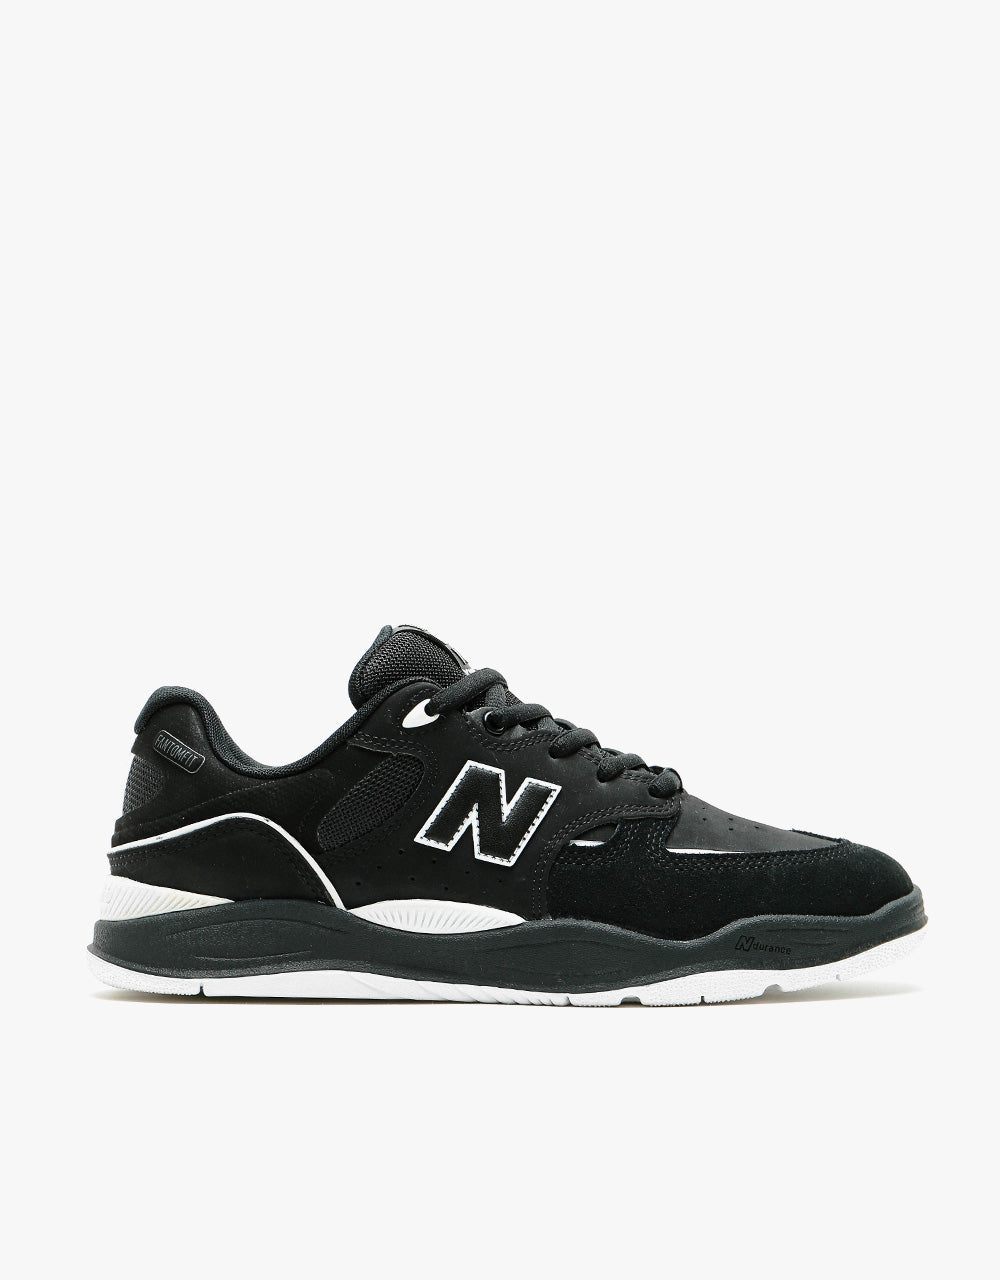 New Balance Numeric 1010 Skate Shoes - Black/White